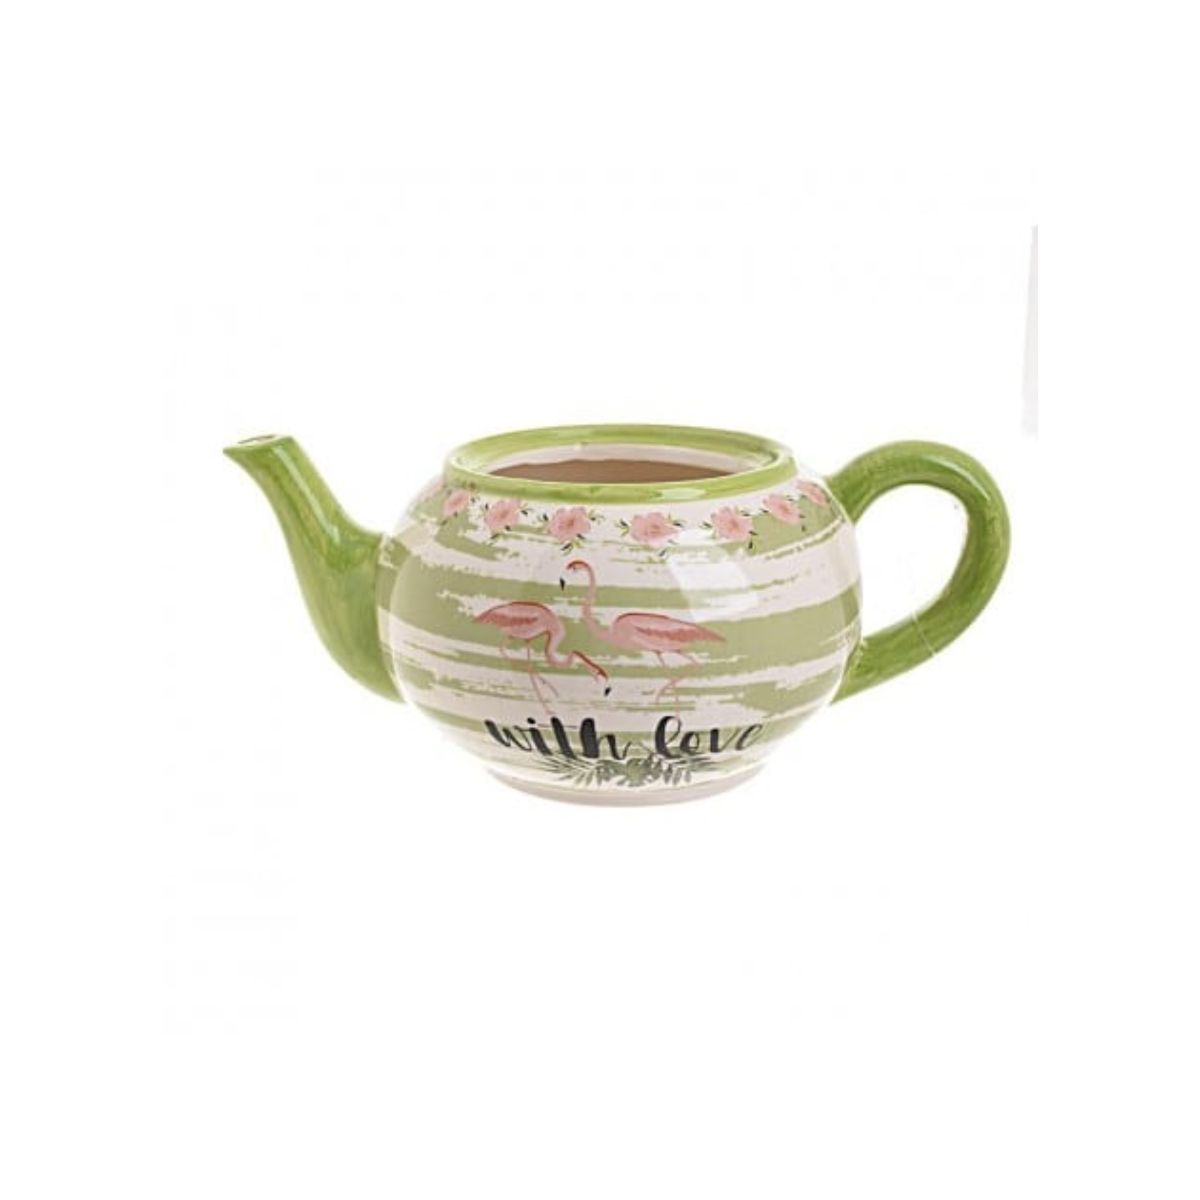 Ghivece - Ghiveci ceramic verde cu alb, ceainic Flamingo LWH 27Χ16,5Χ11, hectarul.ro